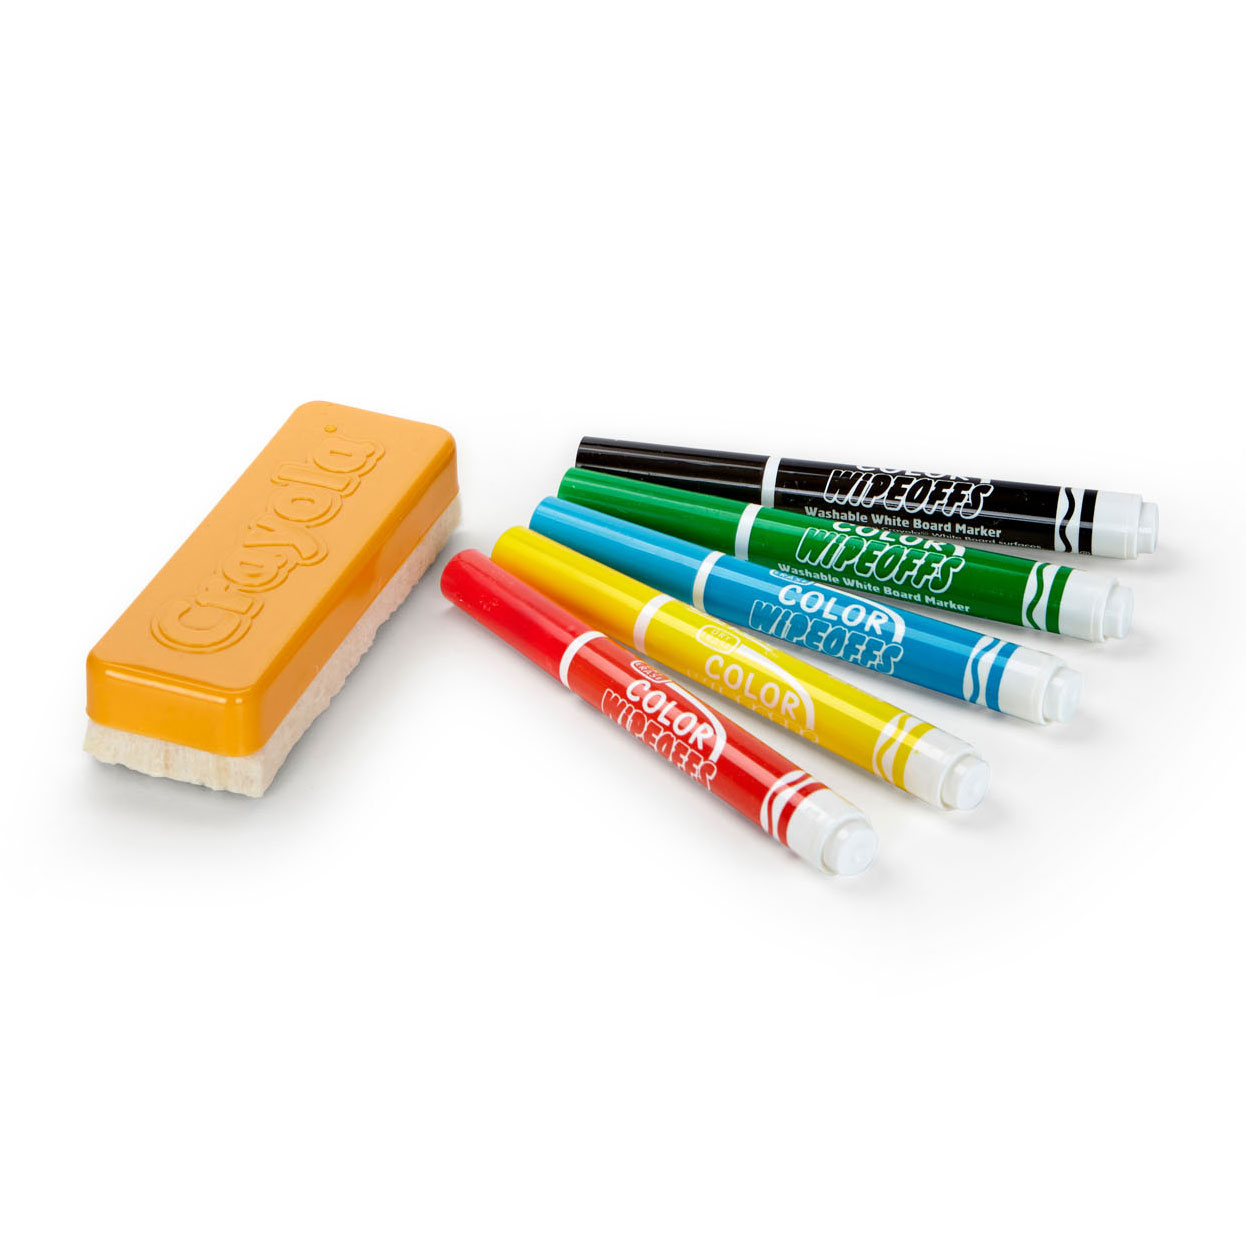 Stylos effaçables à sec Crayola avec gomme, 5 pcs.